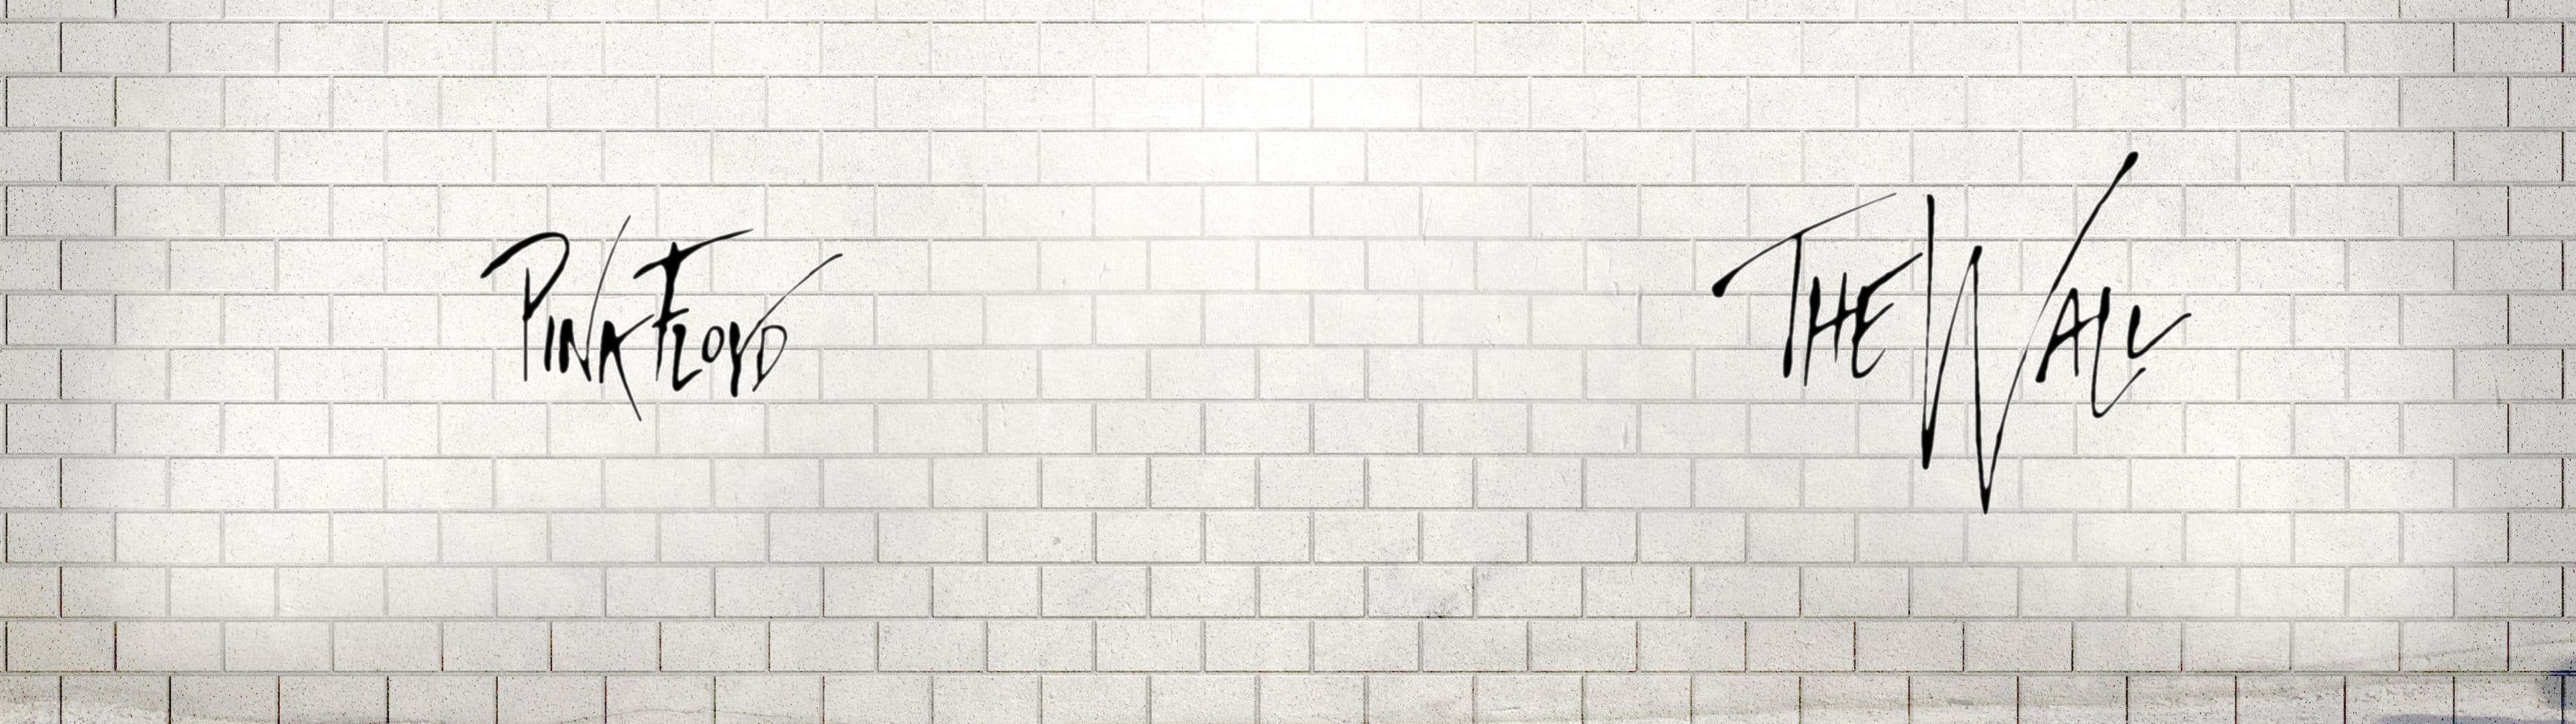 Pink Floyd Væggen 3840 X 1080 Wallpaper